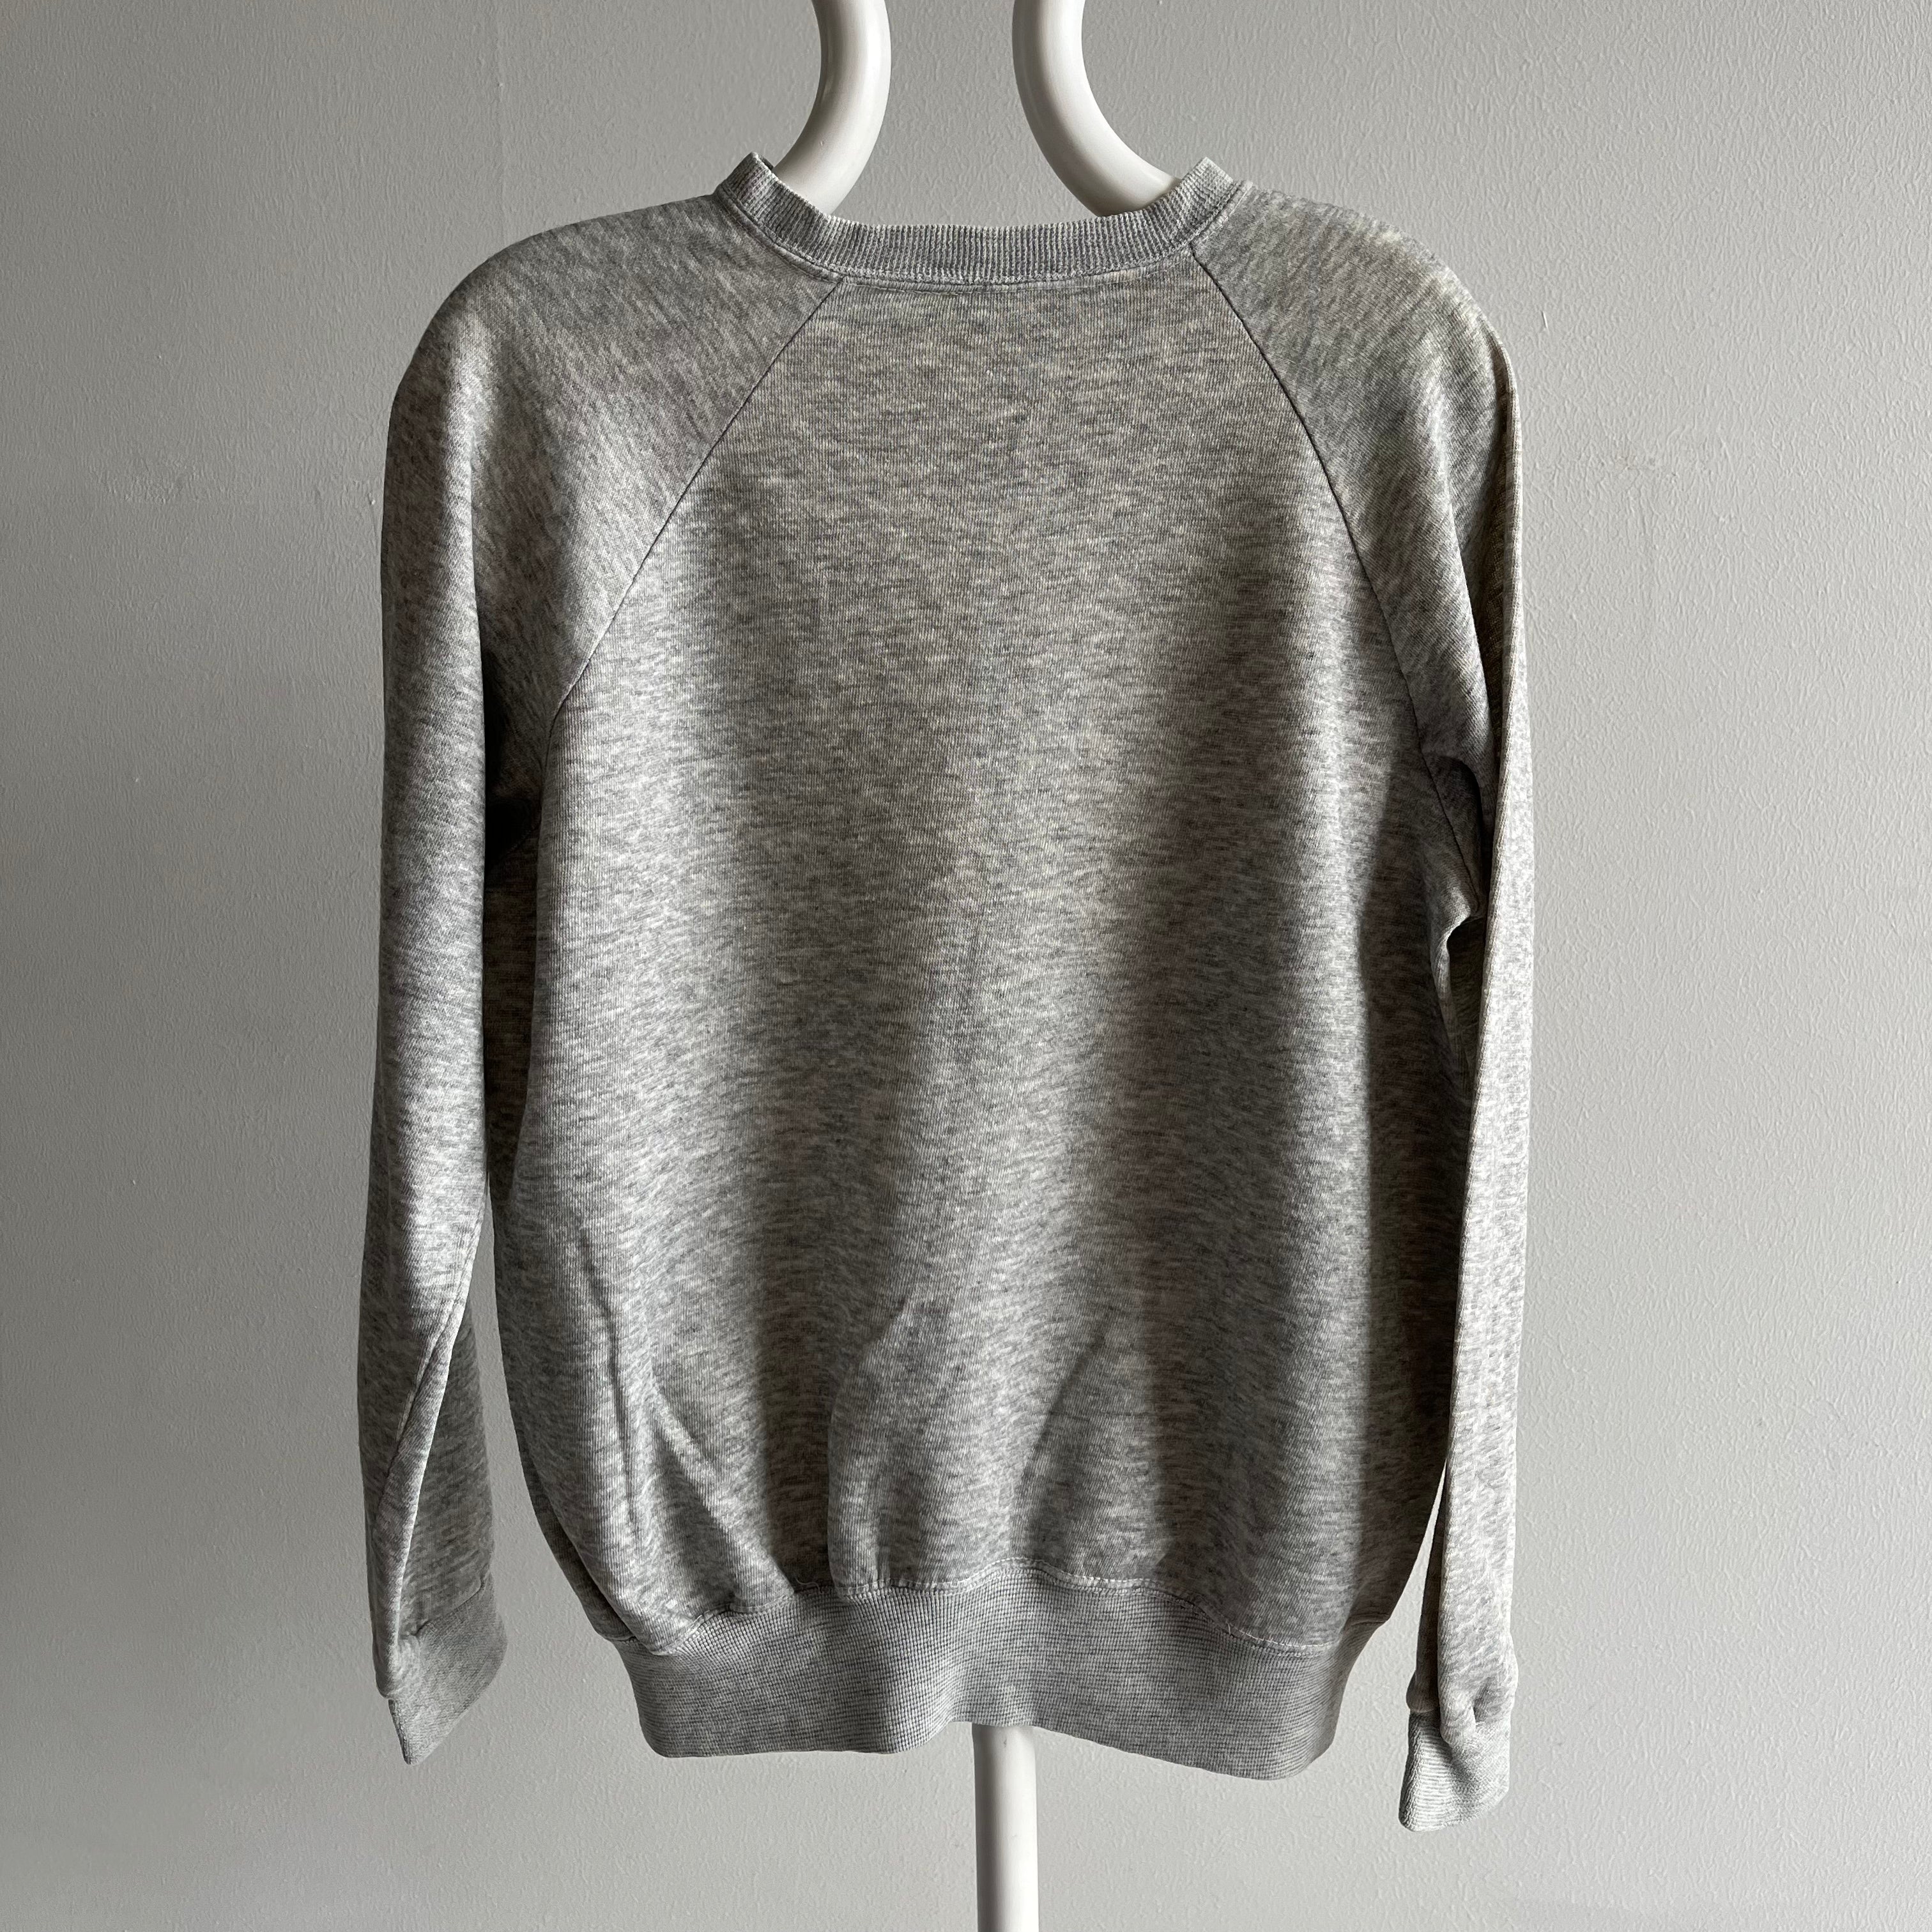 1980s Blank Gray Sweatshirt with a Cigarette Burn